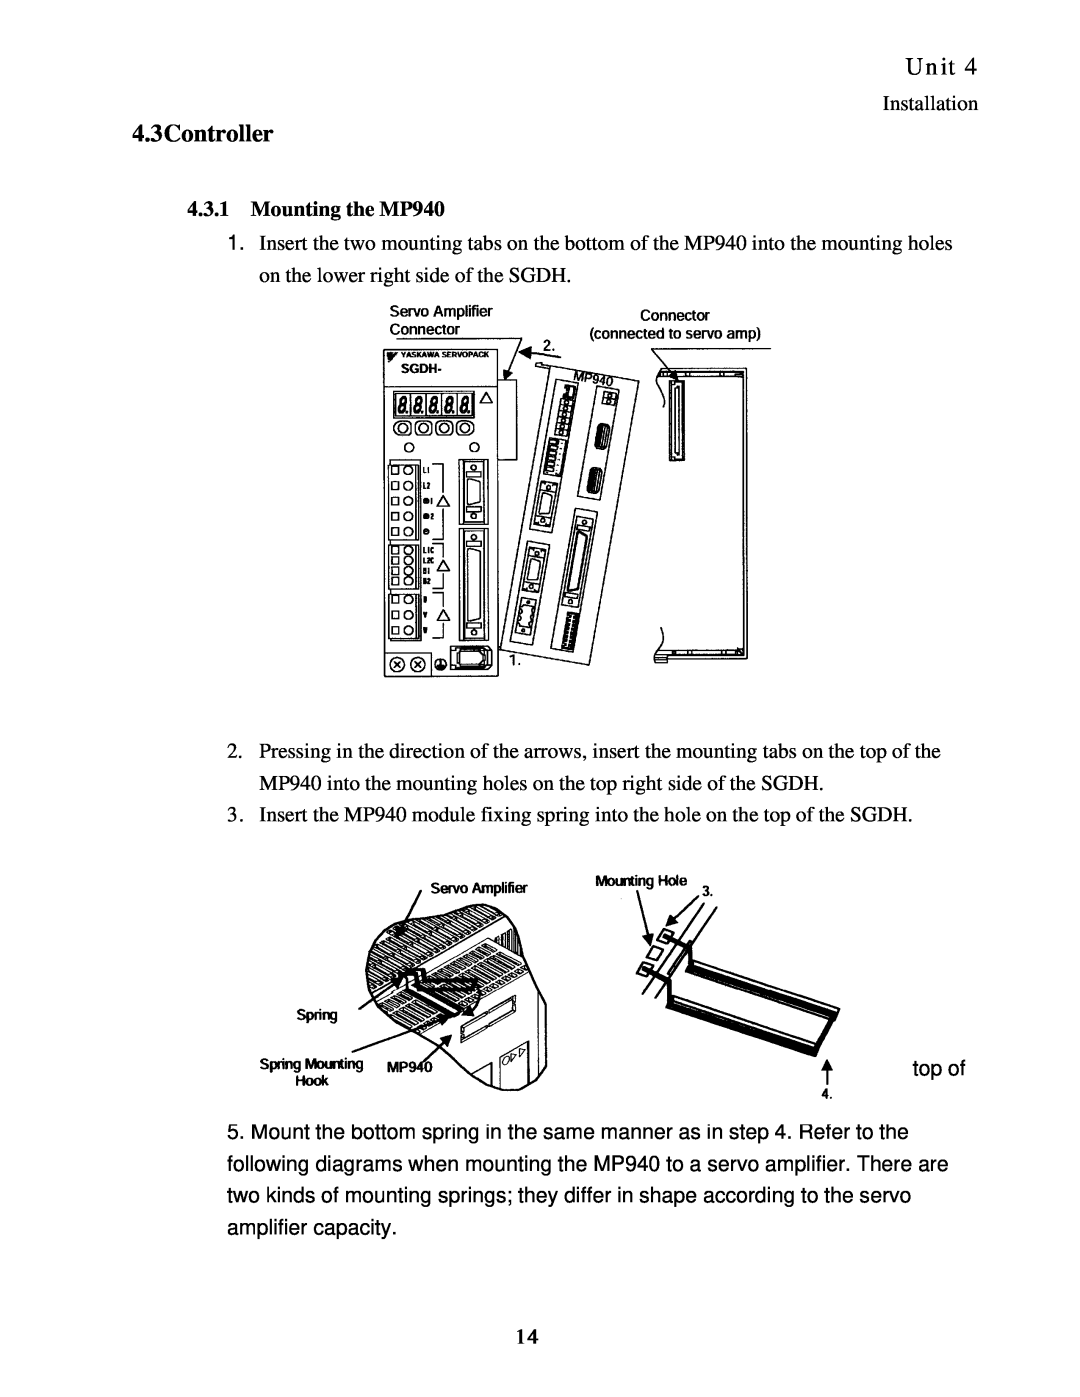 Sankyo 11AR manual 4.3Controller, Unit, 4.3.1Mounting the MP940 